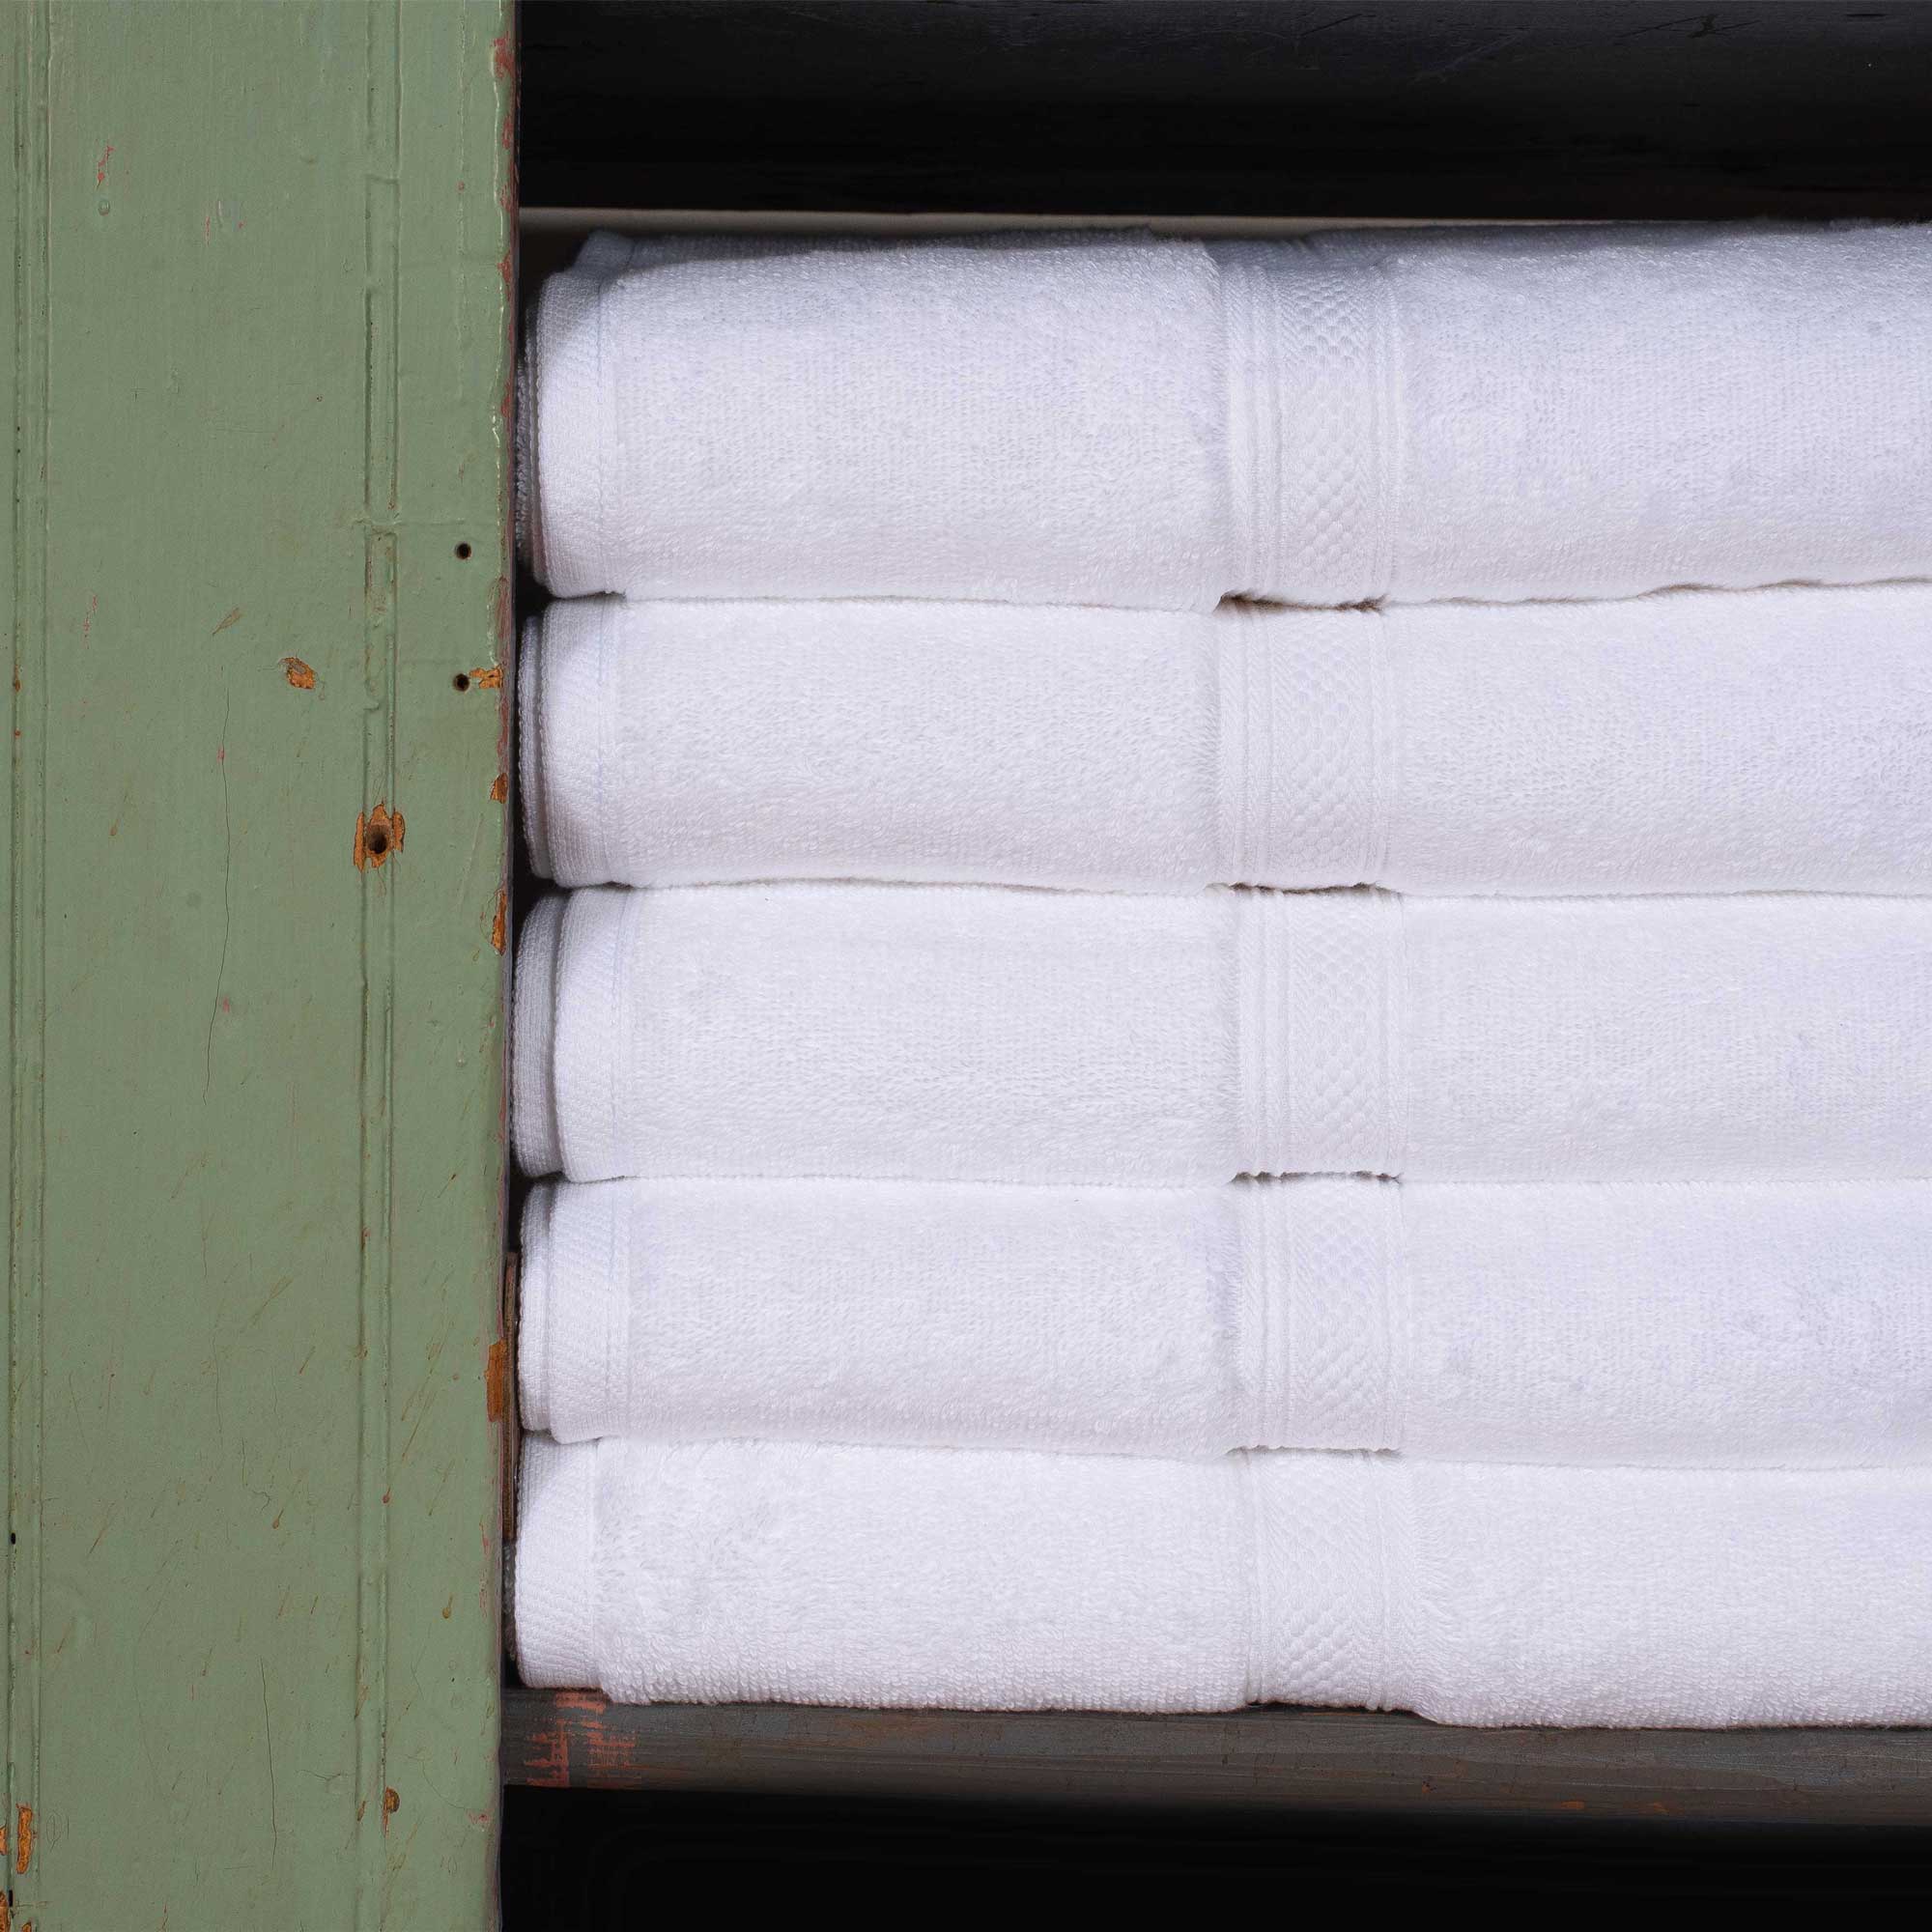 Super Soft Luxury Bath Sheets - 1 Bath Sheet White 100% Cotton